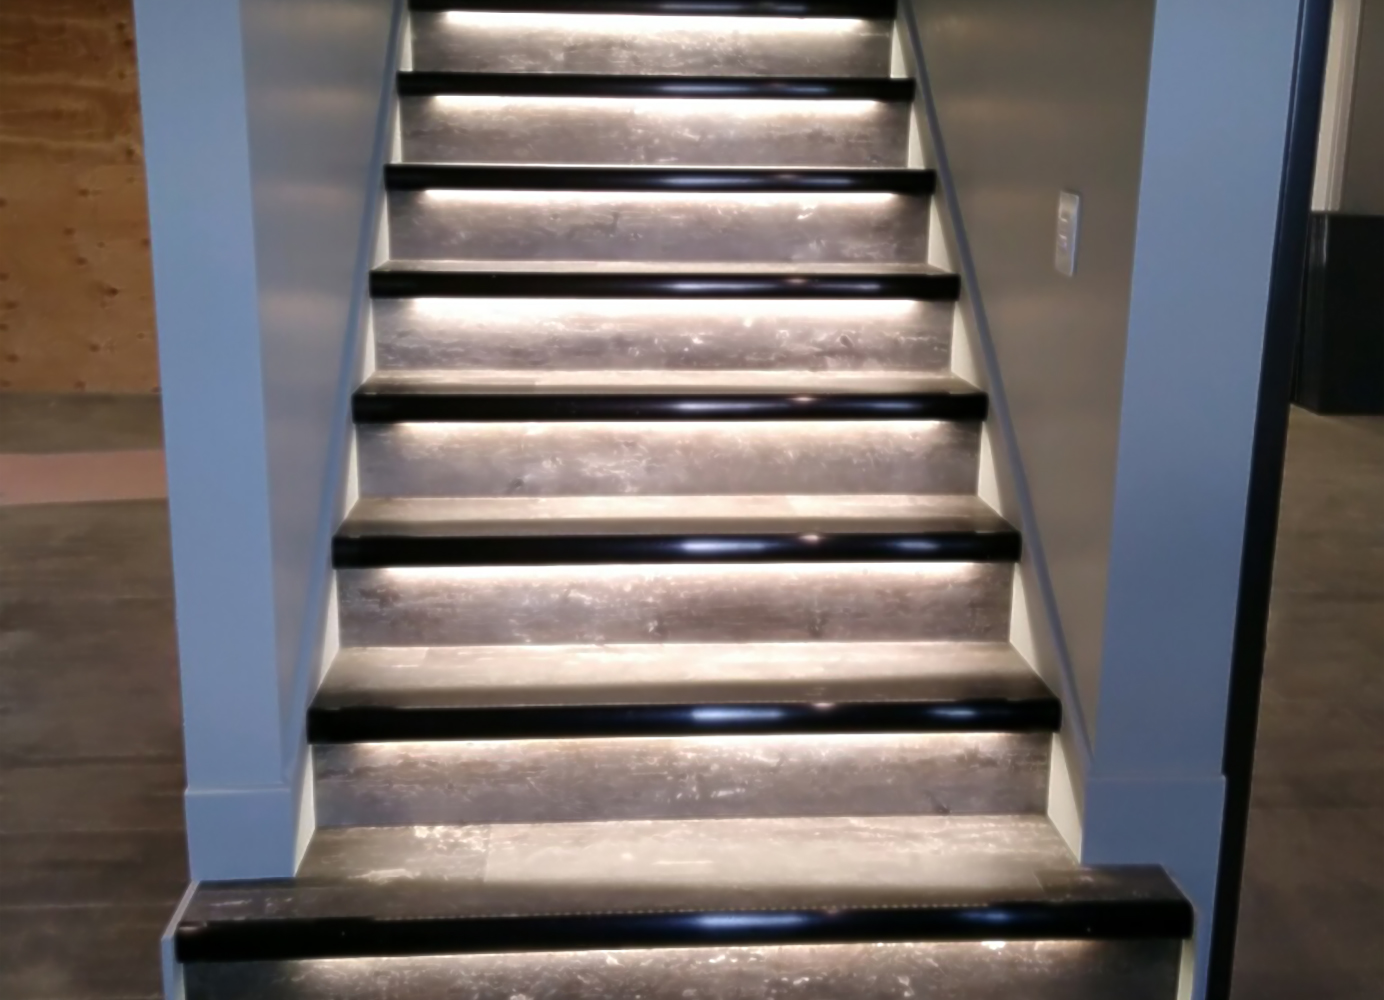 Stair Lighting